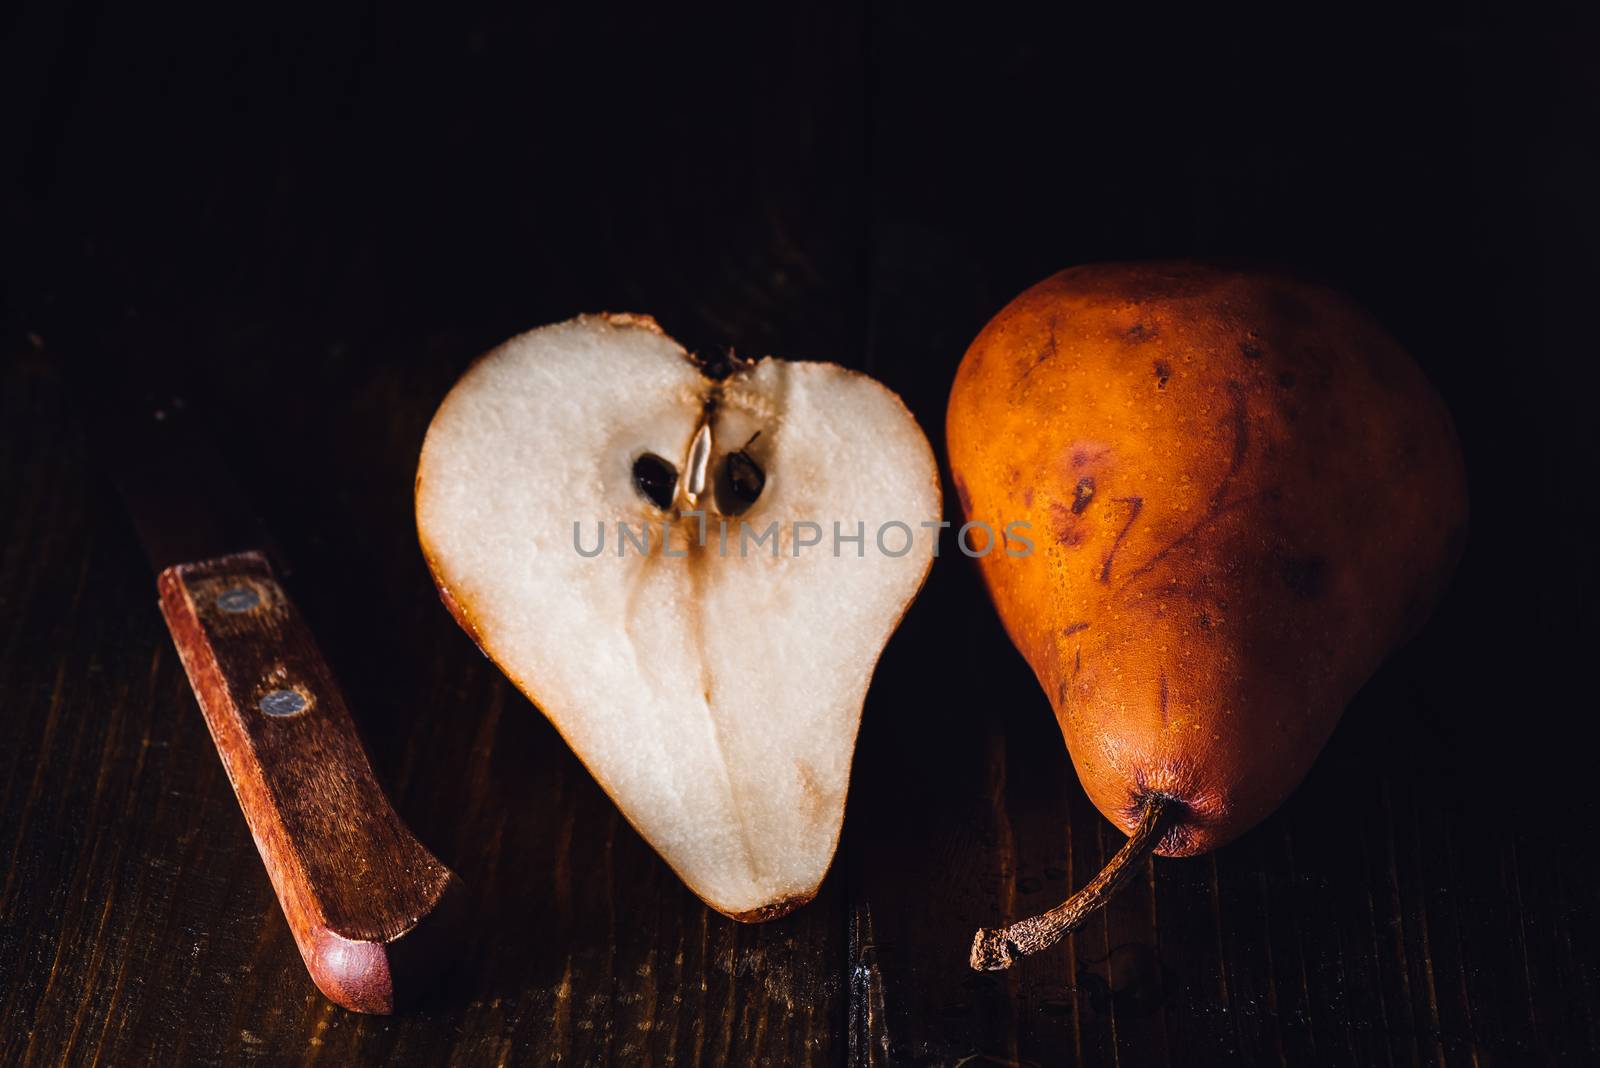 Golden Pear and Knife by Seva_blsv